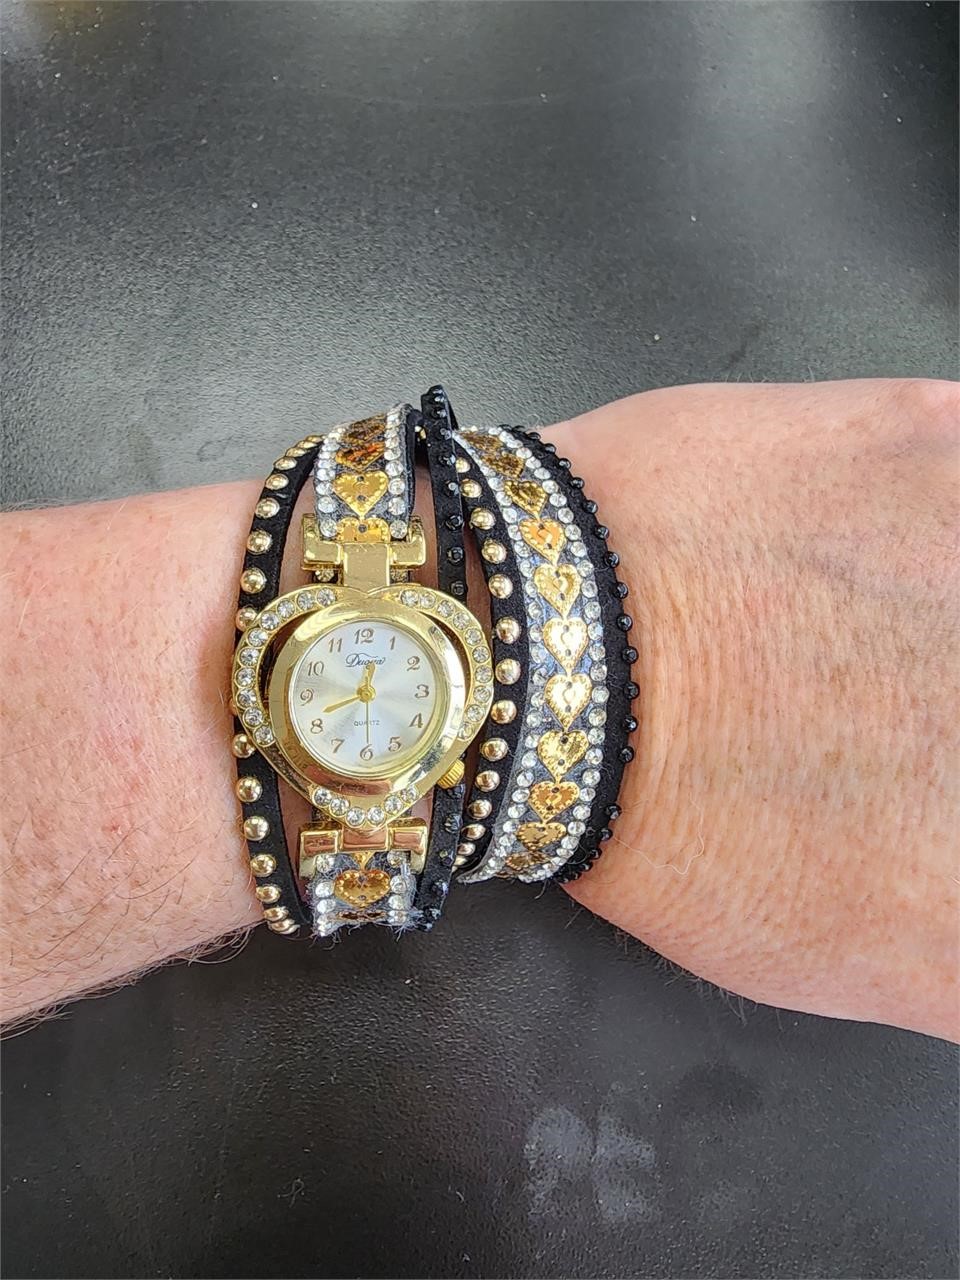 Bracelet style wrap around watch with crystals